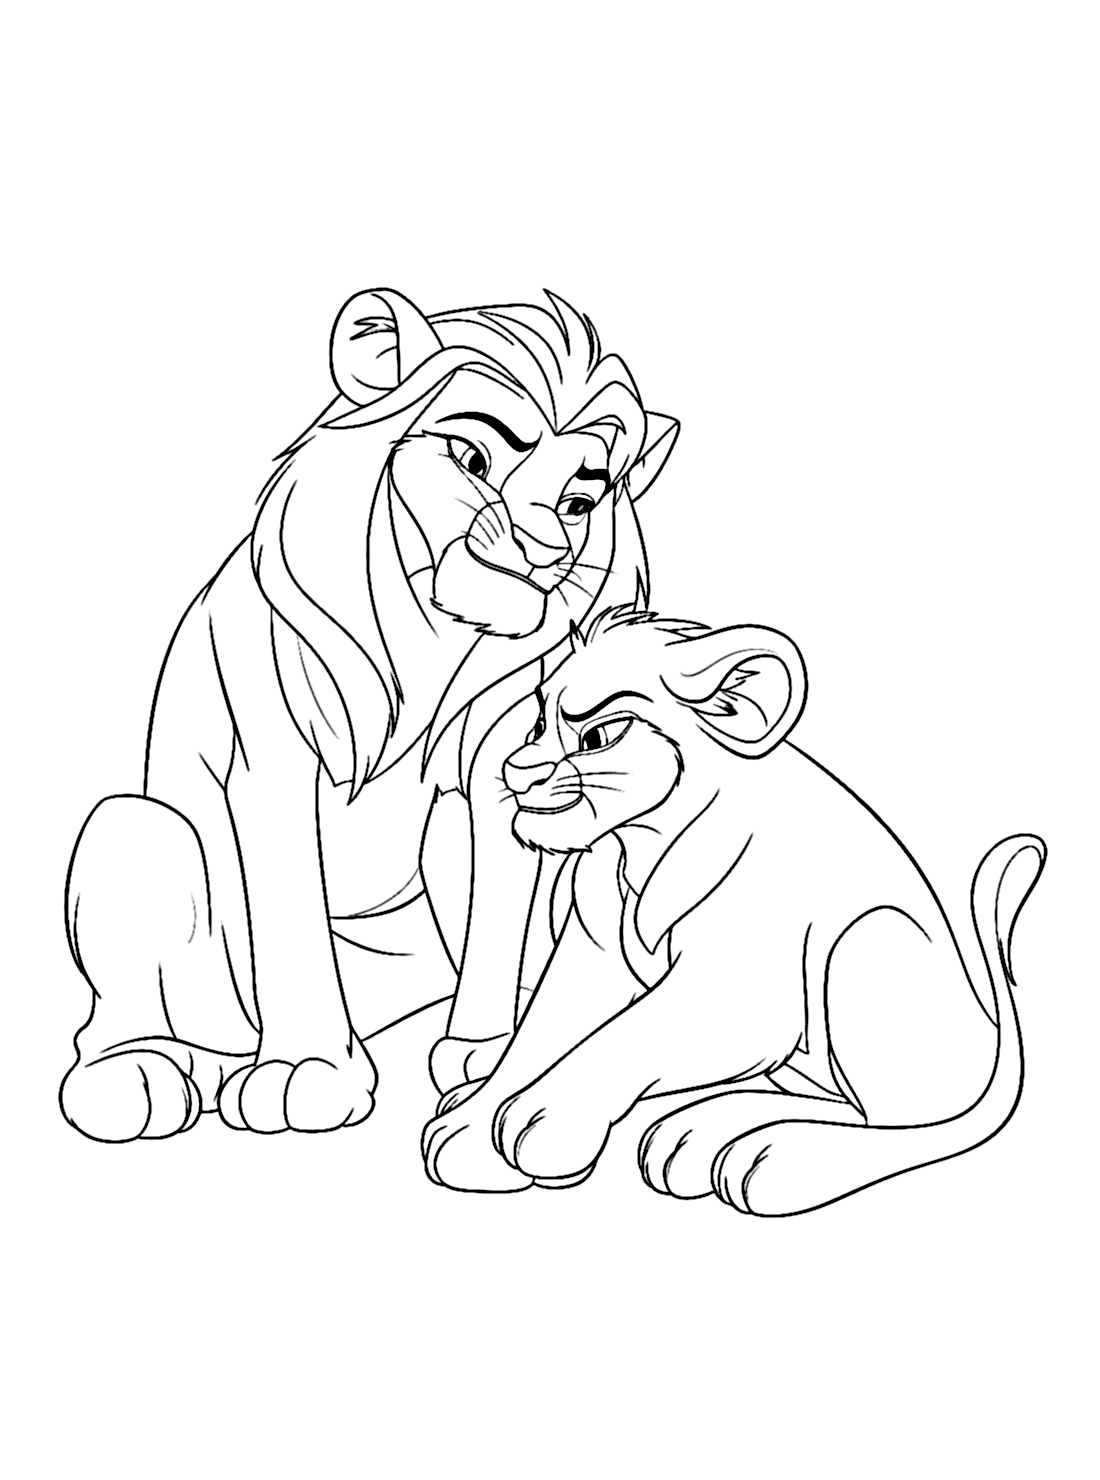 Cute Simba and Nala